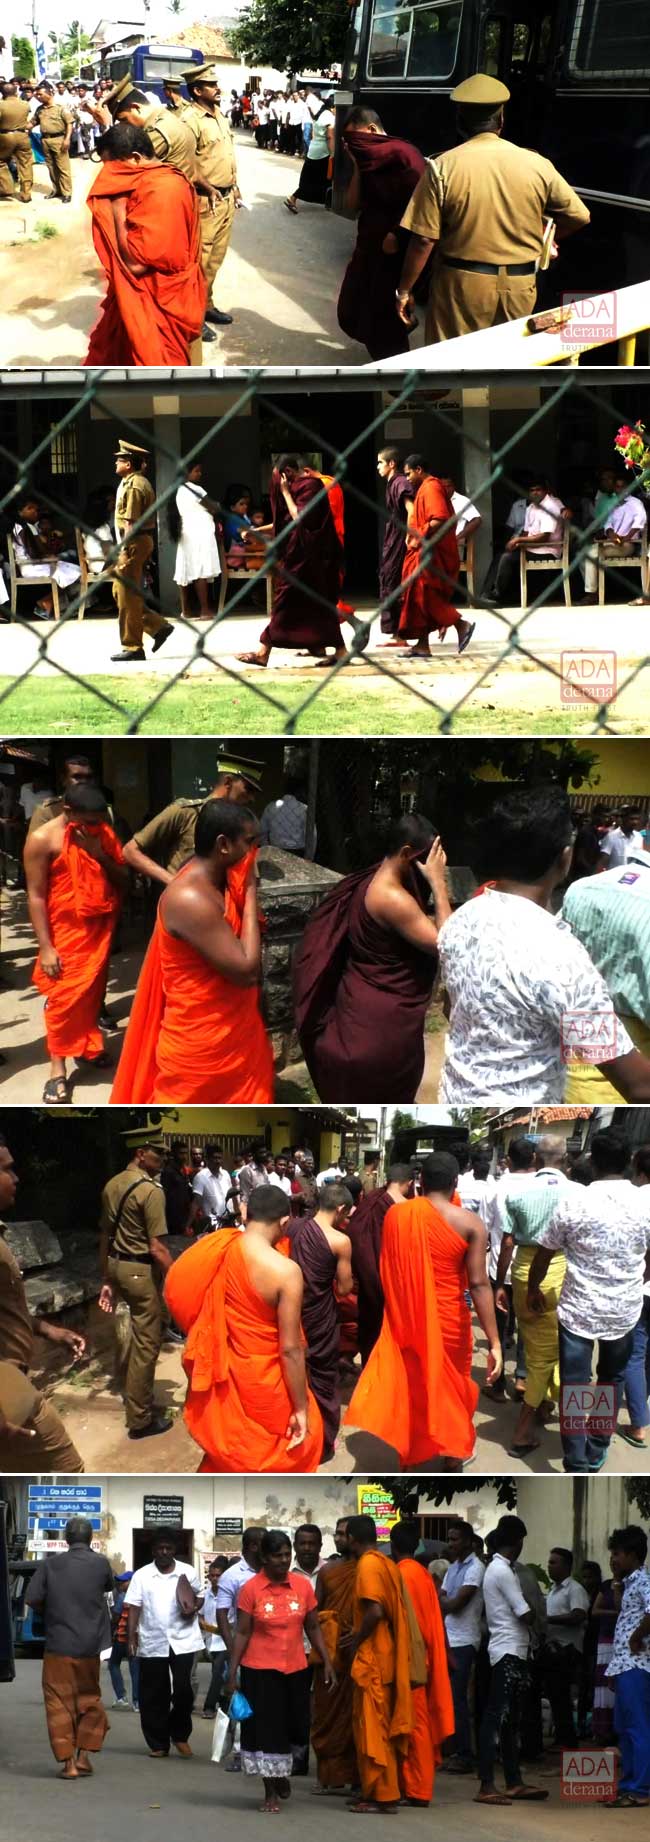 Five monks further remanded over ragging incident